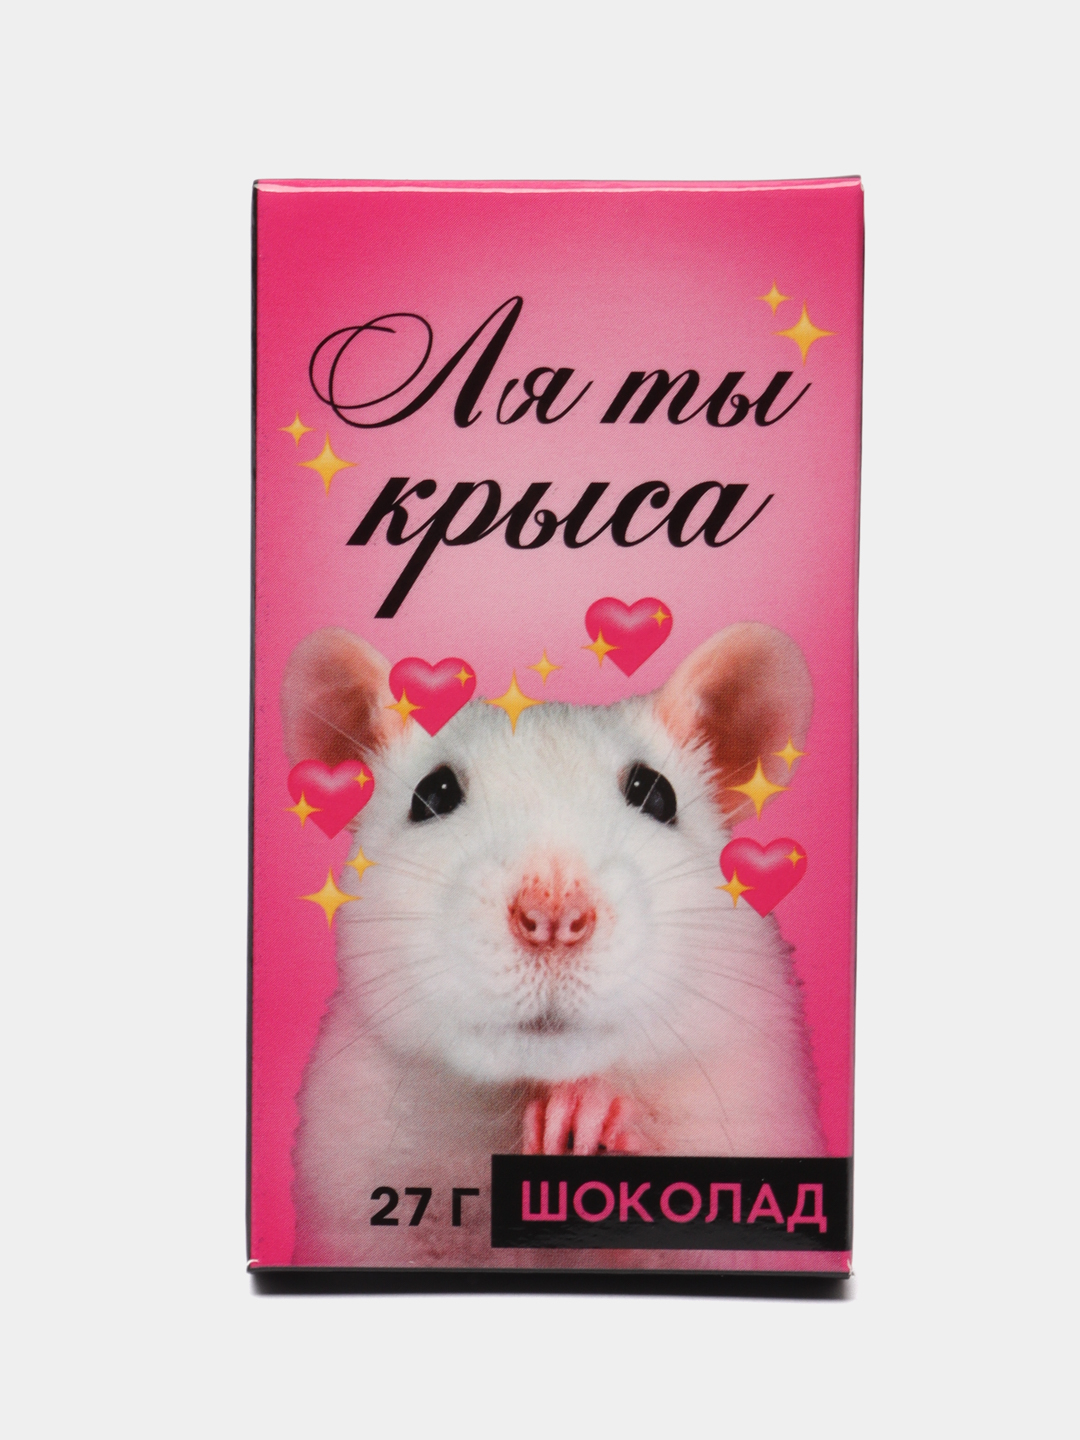 Ля ты крыса полная. Шоколад ля ты крыса. Ля ты крыса картинка. Магазин ля ты крыса. Носки ля ты крыса.